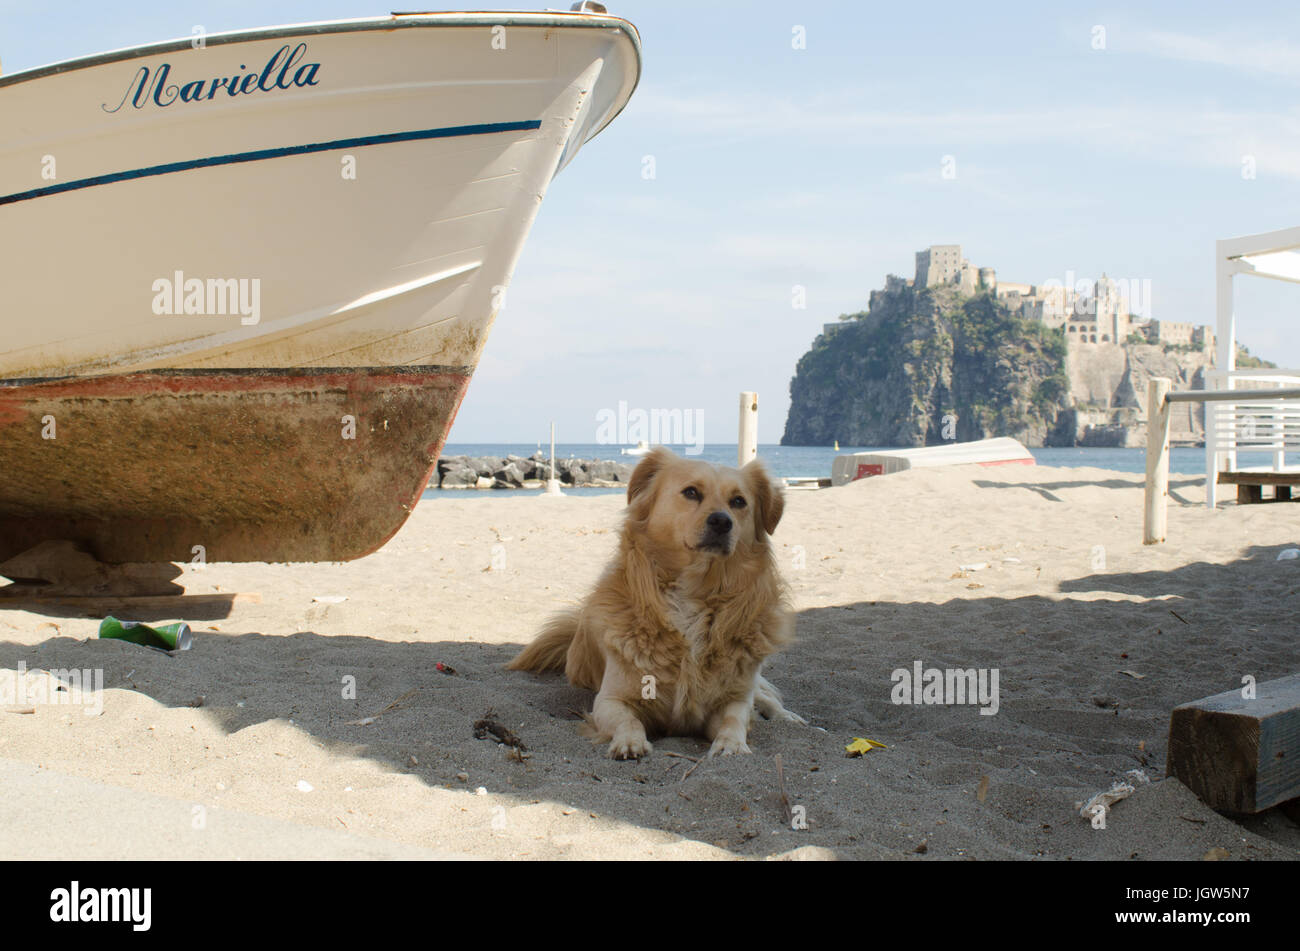 Island life, Ischia, Gulf of Naples. Stock Photo